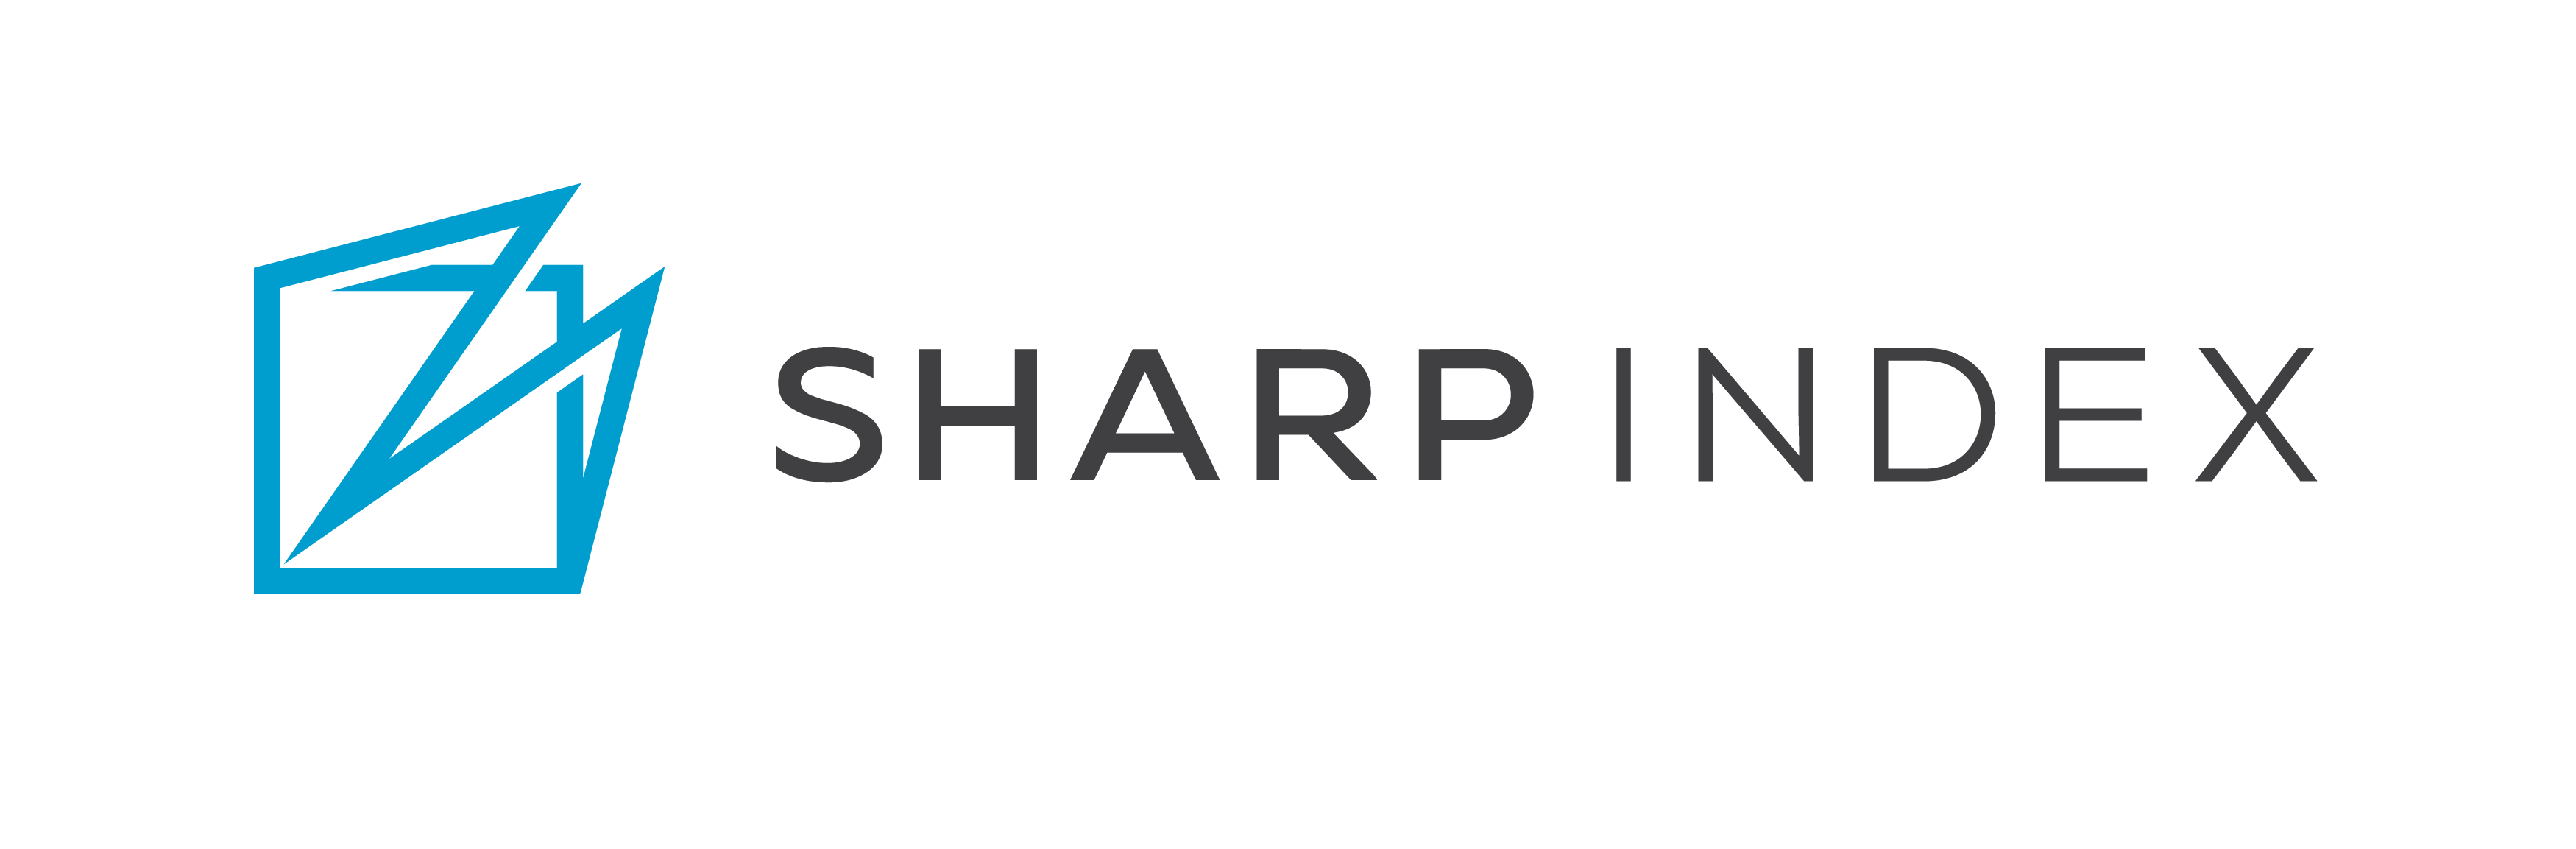 Sharp Index logo